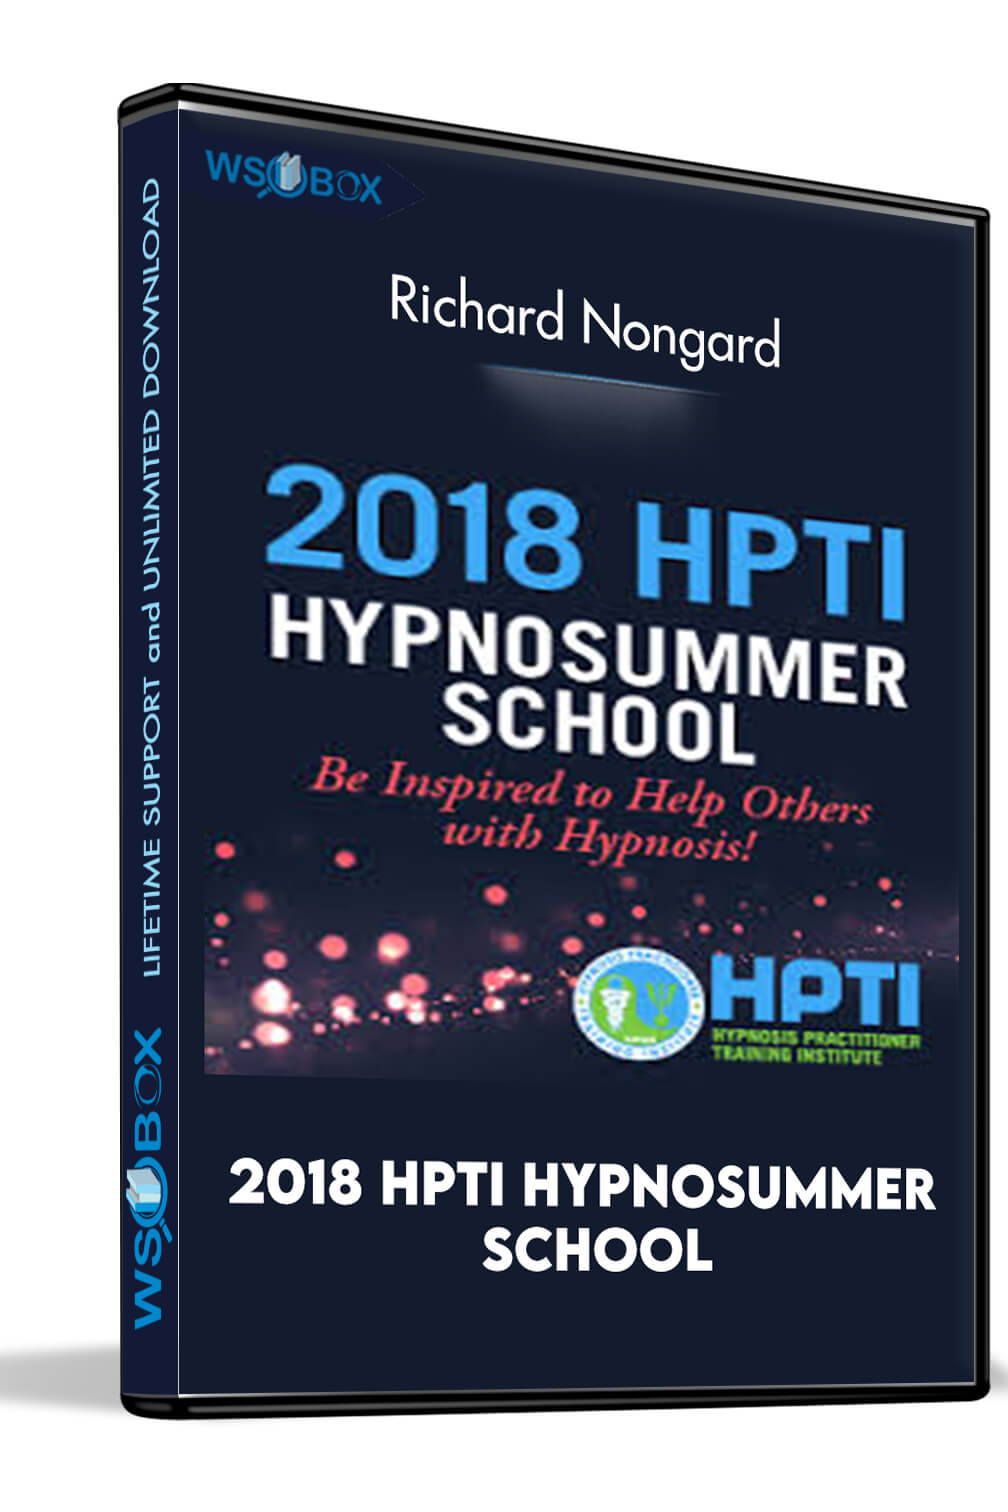 2018 HPTI HypnoSummer School – Richard Nongard